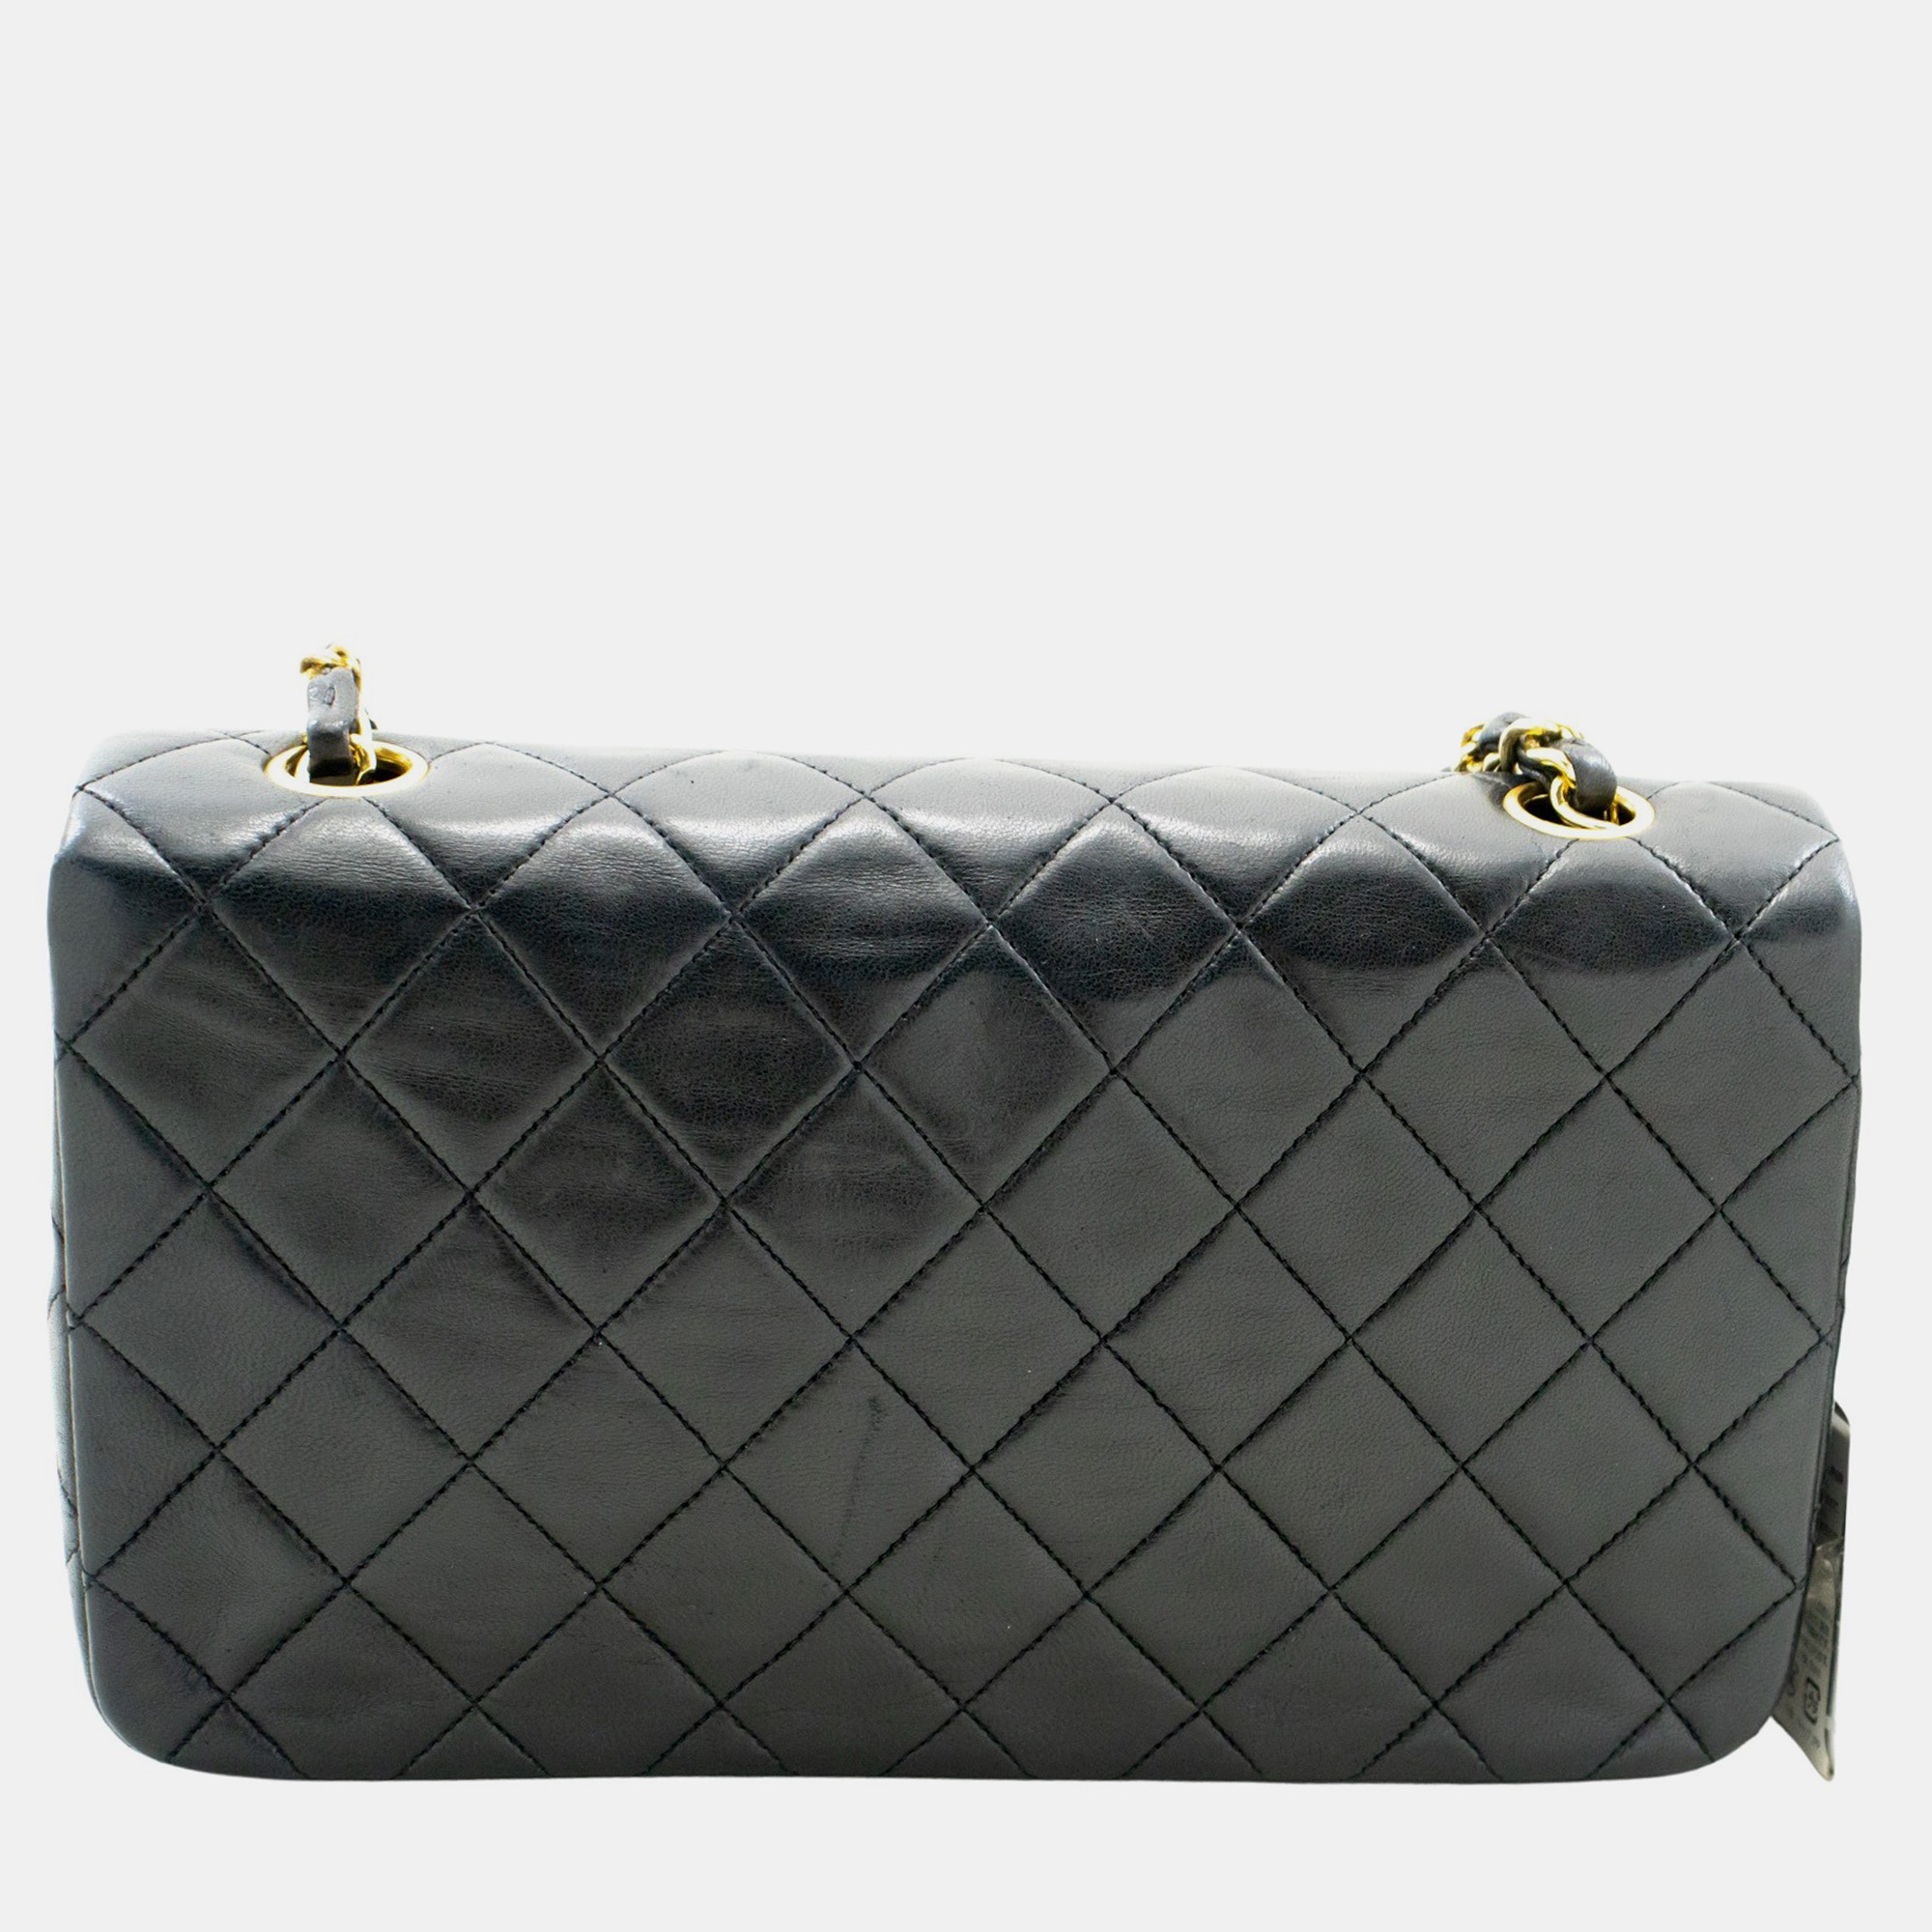 Chanel Black Leather Flap Bag